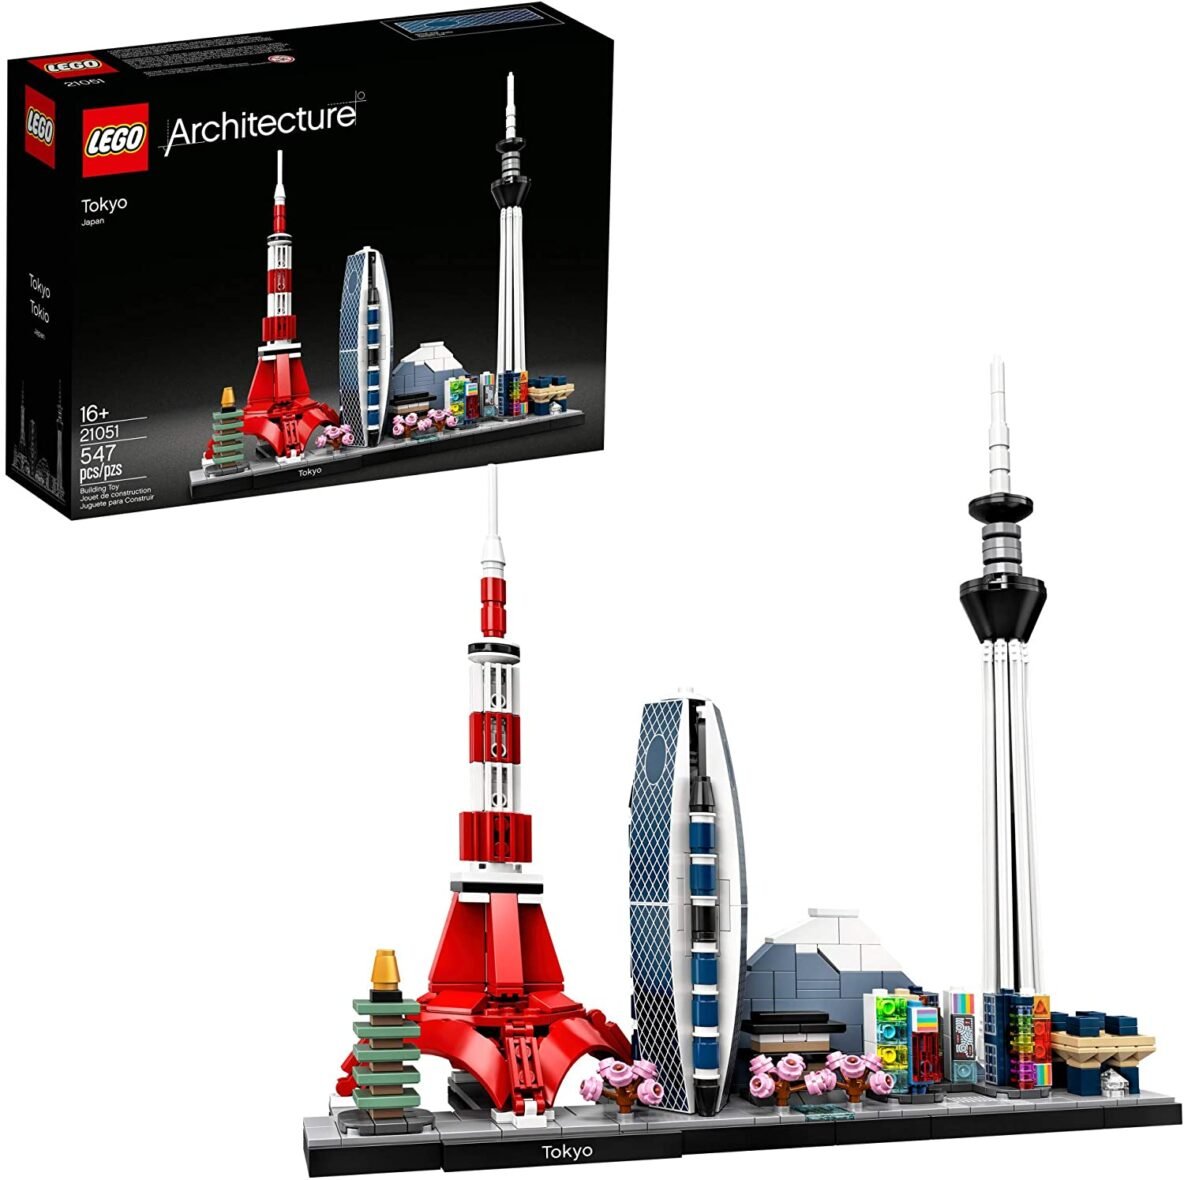 LEGO Architecture Skylines: Tokyo 21051 Building Kit, Collectible Architecture Building Set (547 Pieces)